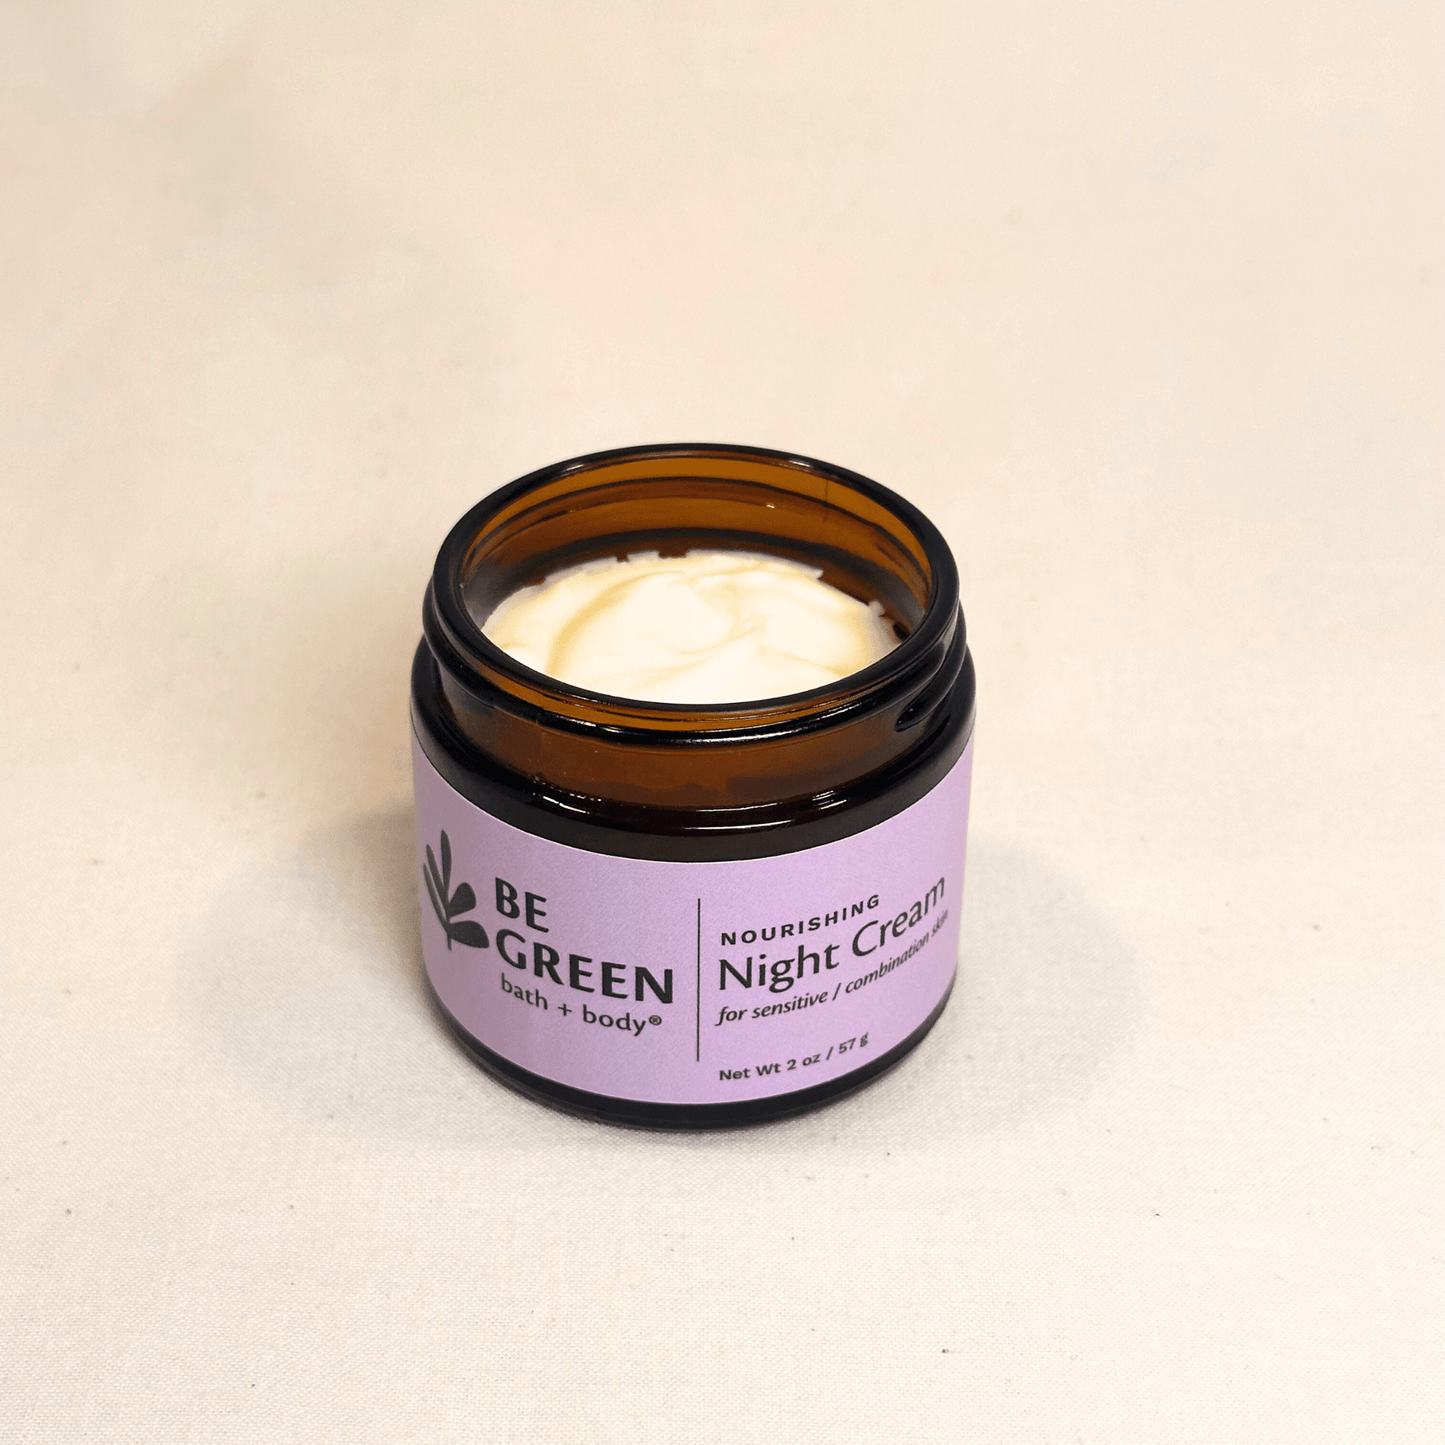 Natural night cream for sensitive skin open amber glass jar